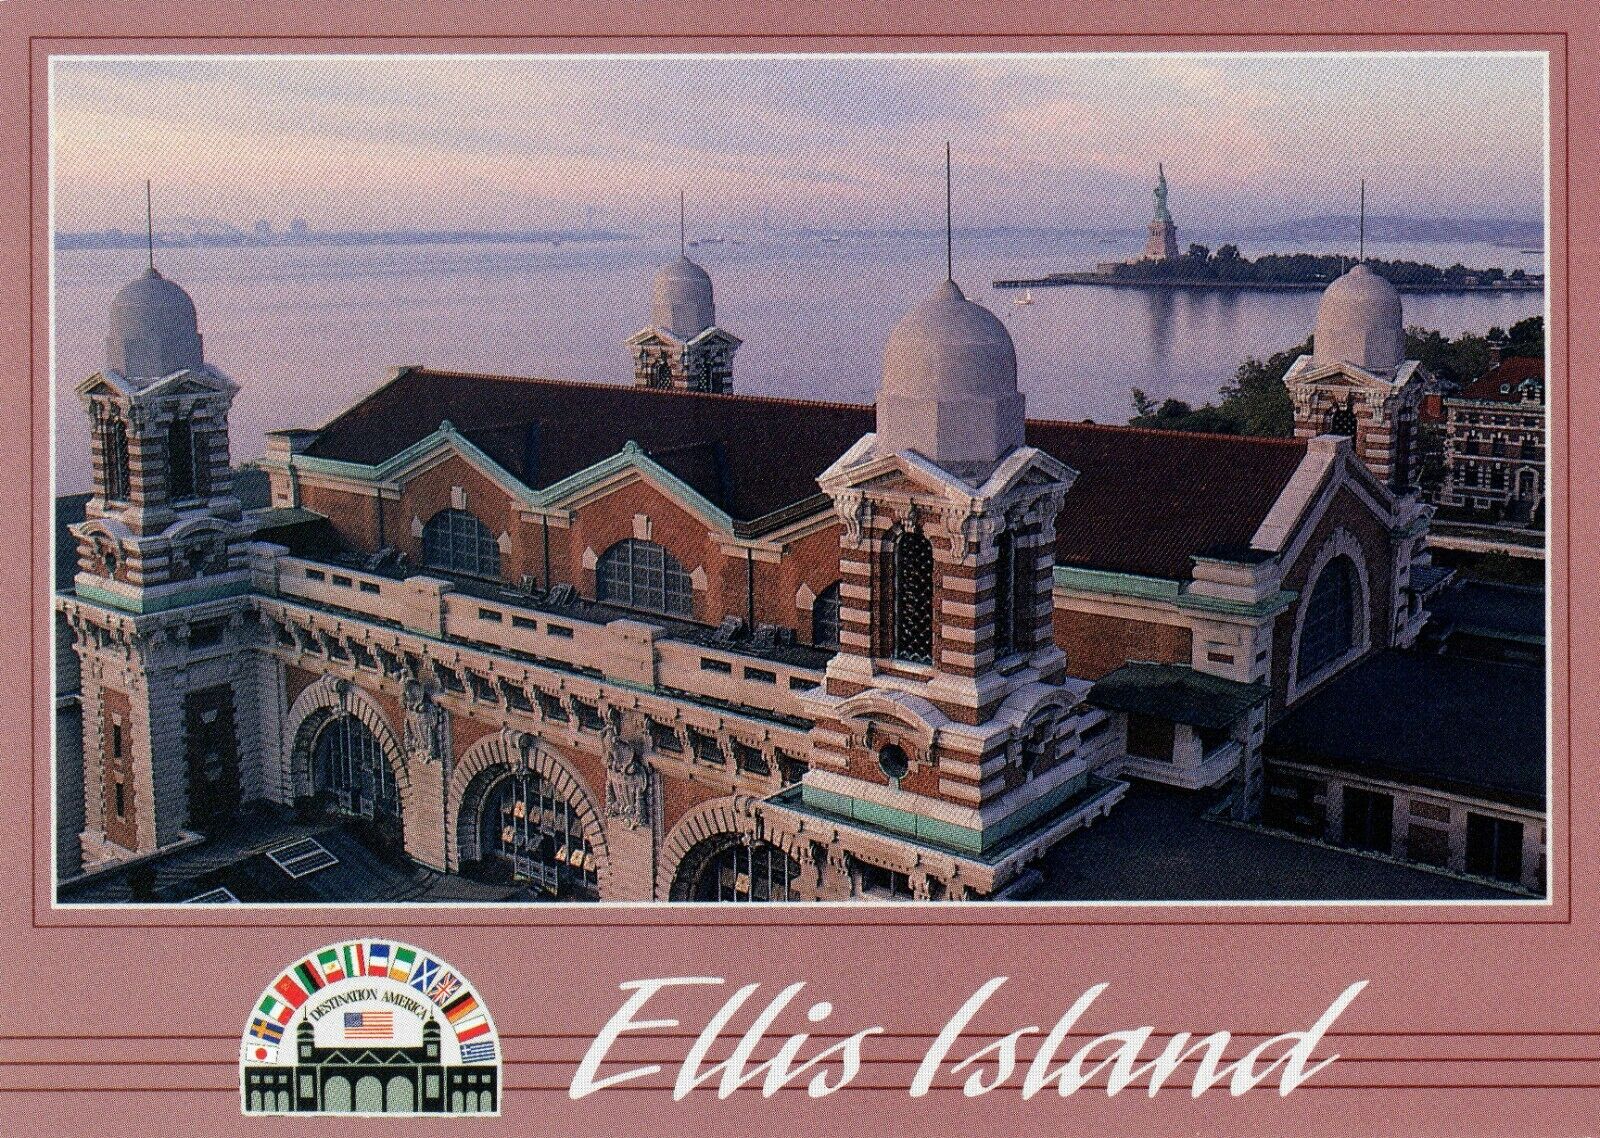 Ellis Island Postcards Lot of 3 c.1991 Impact Publishing #13614, 13620, 13607